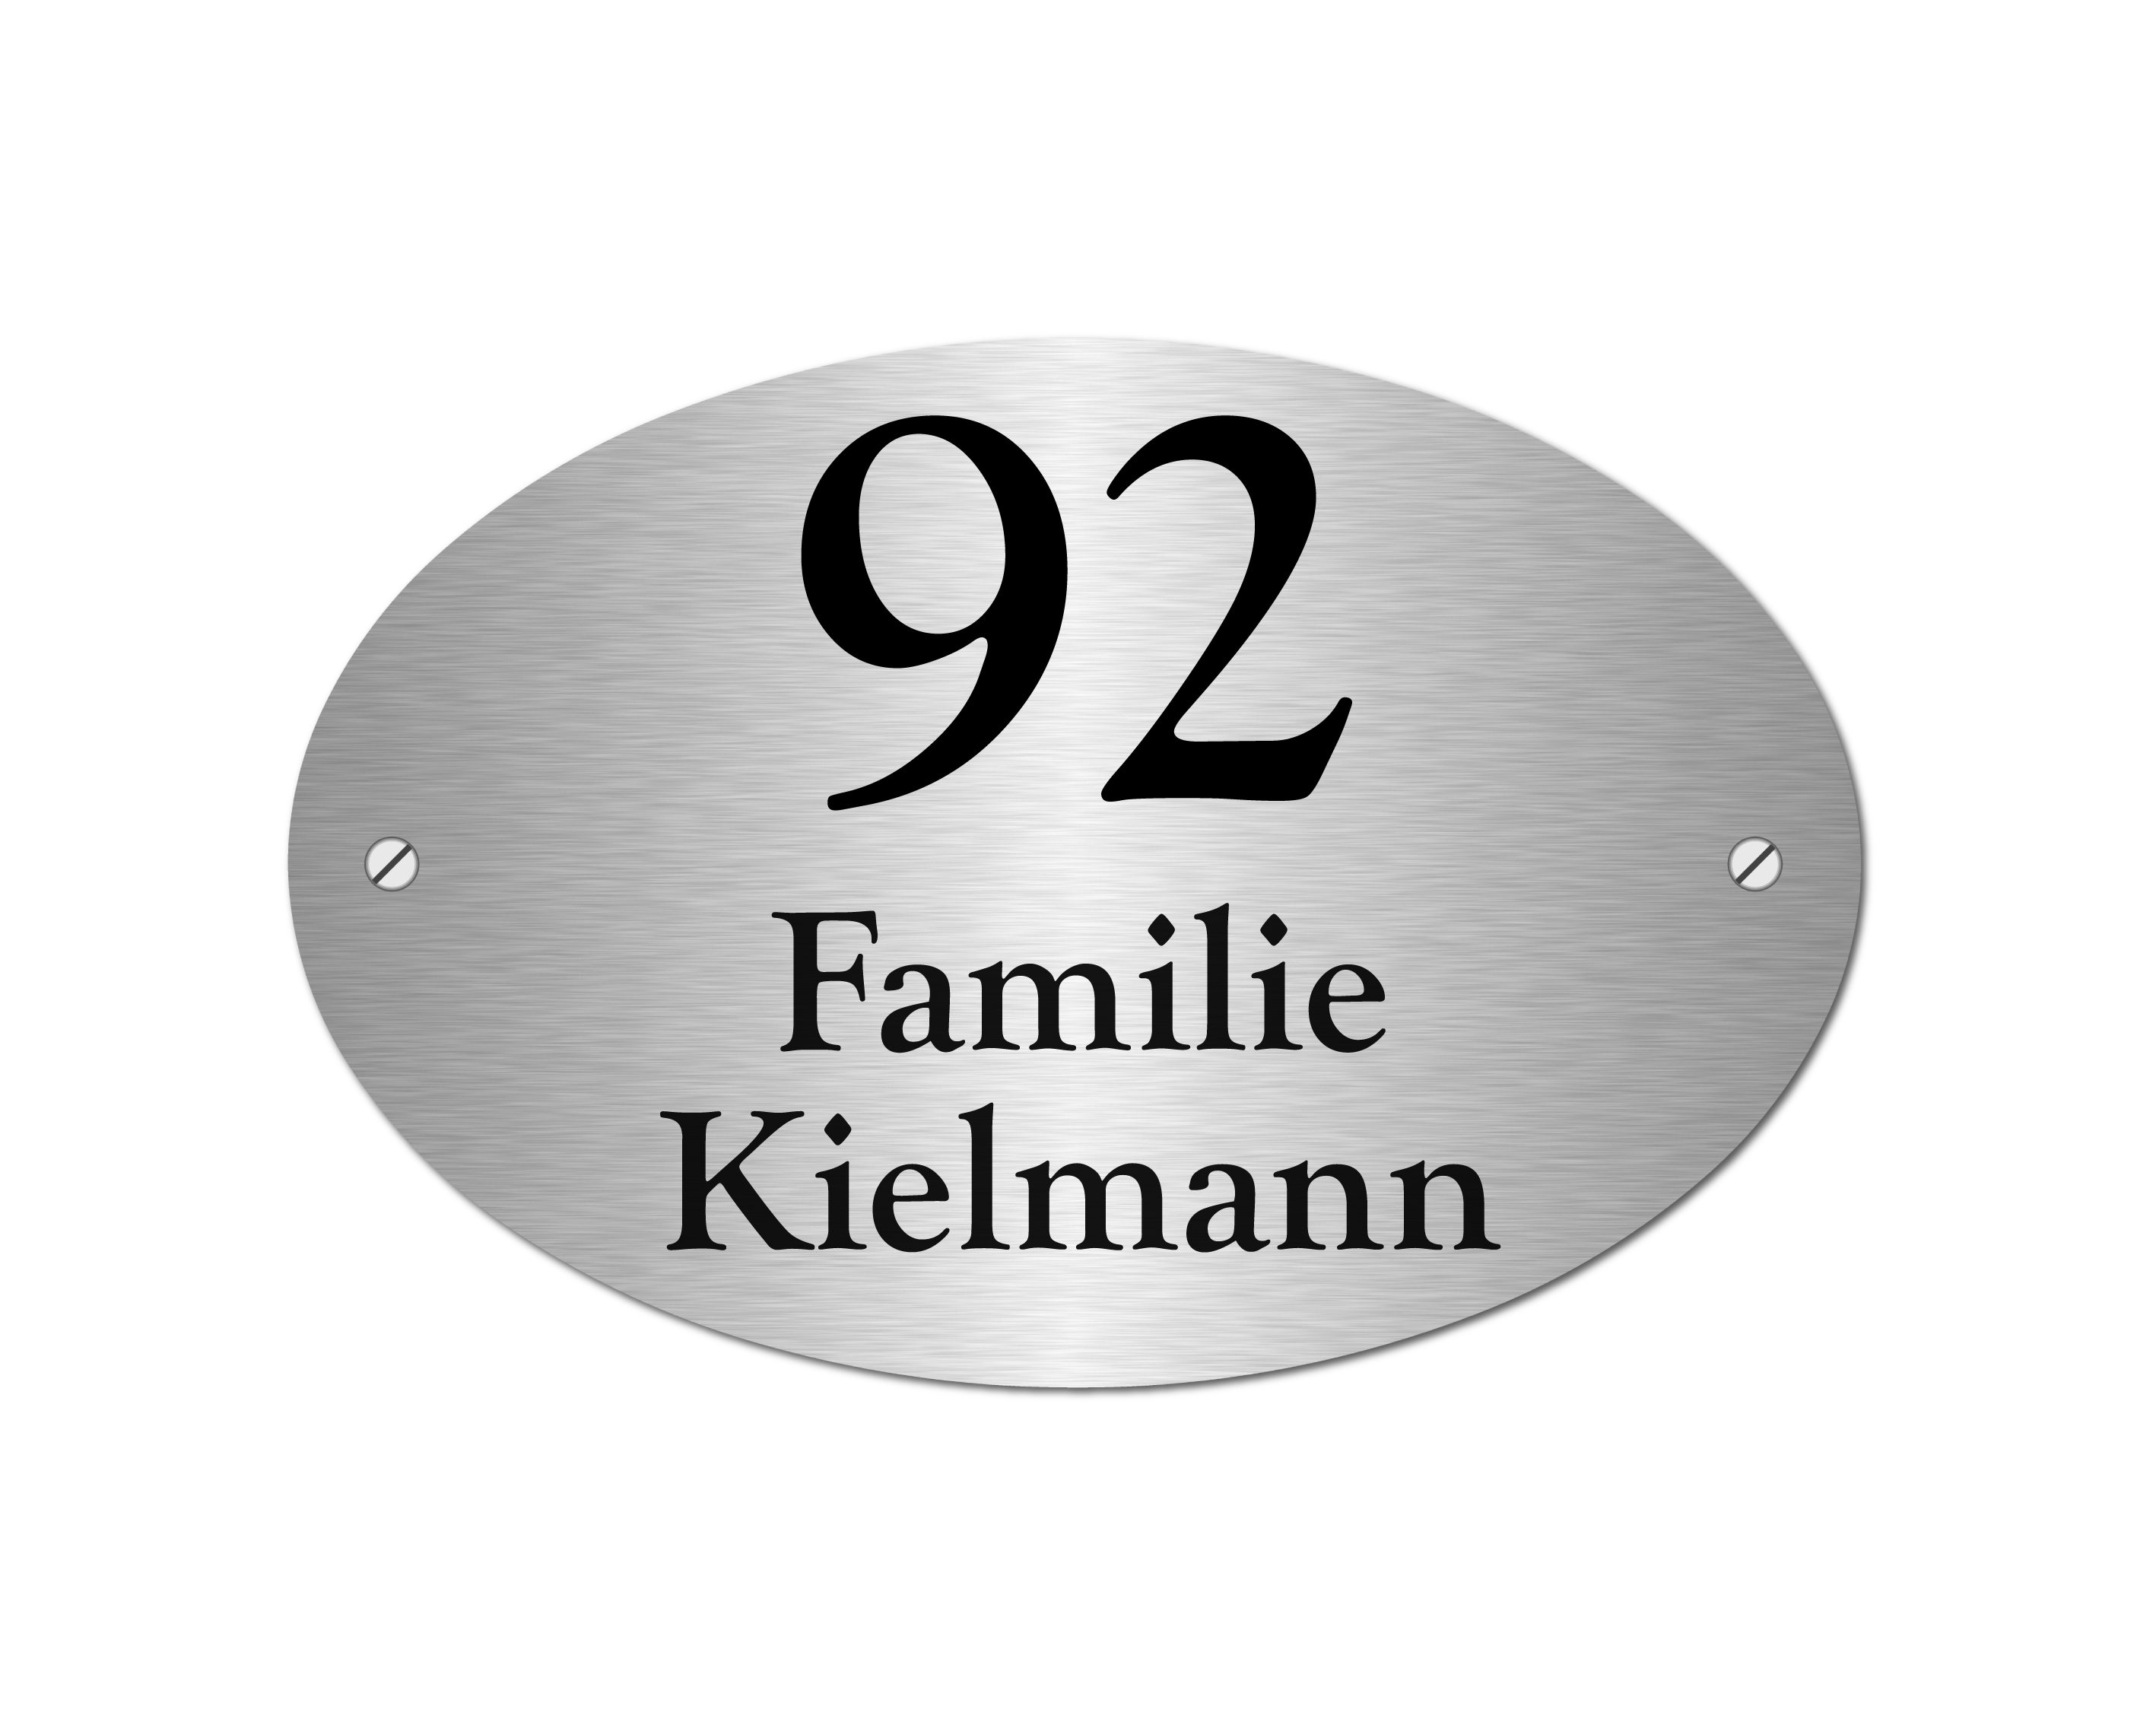 Namensschild aus Edelstahl – Oval 15×10 cm. (Art. 222)